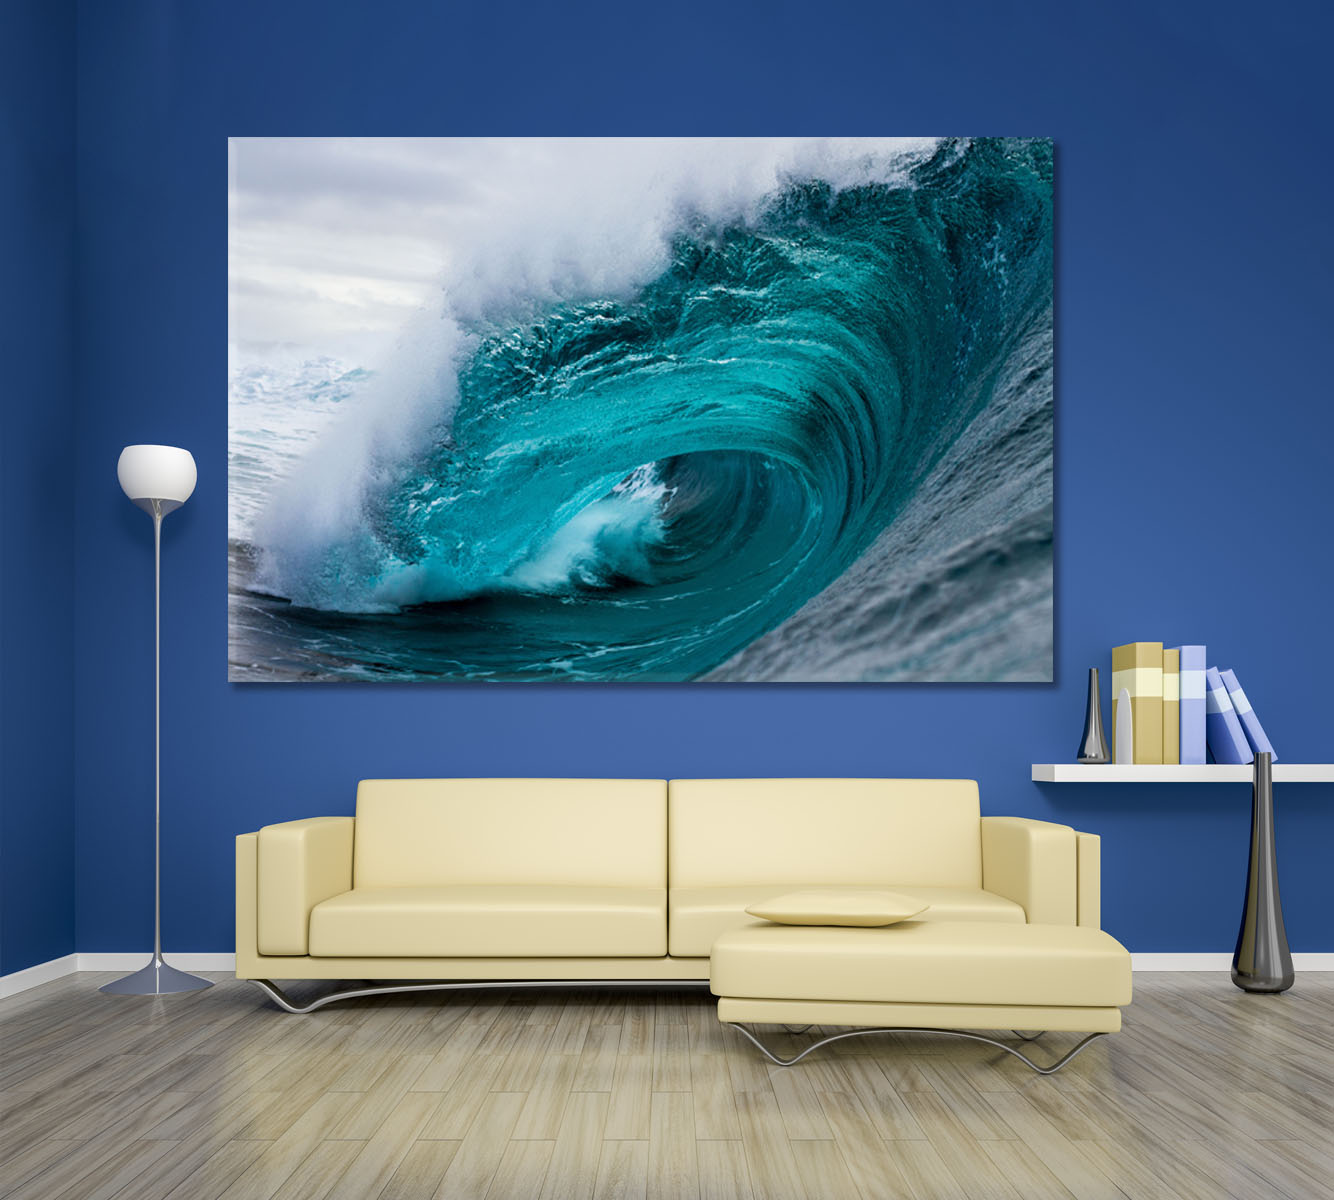 Big Blue Crashing Wave Scenic Impressive Photo Nautical, Sea Life Pattern Art Artesty 1 panel 24" x 16" 